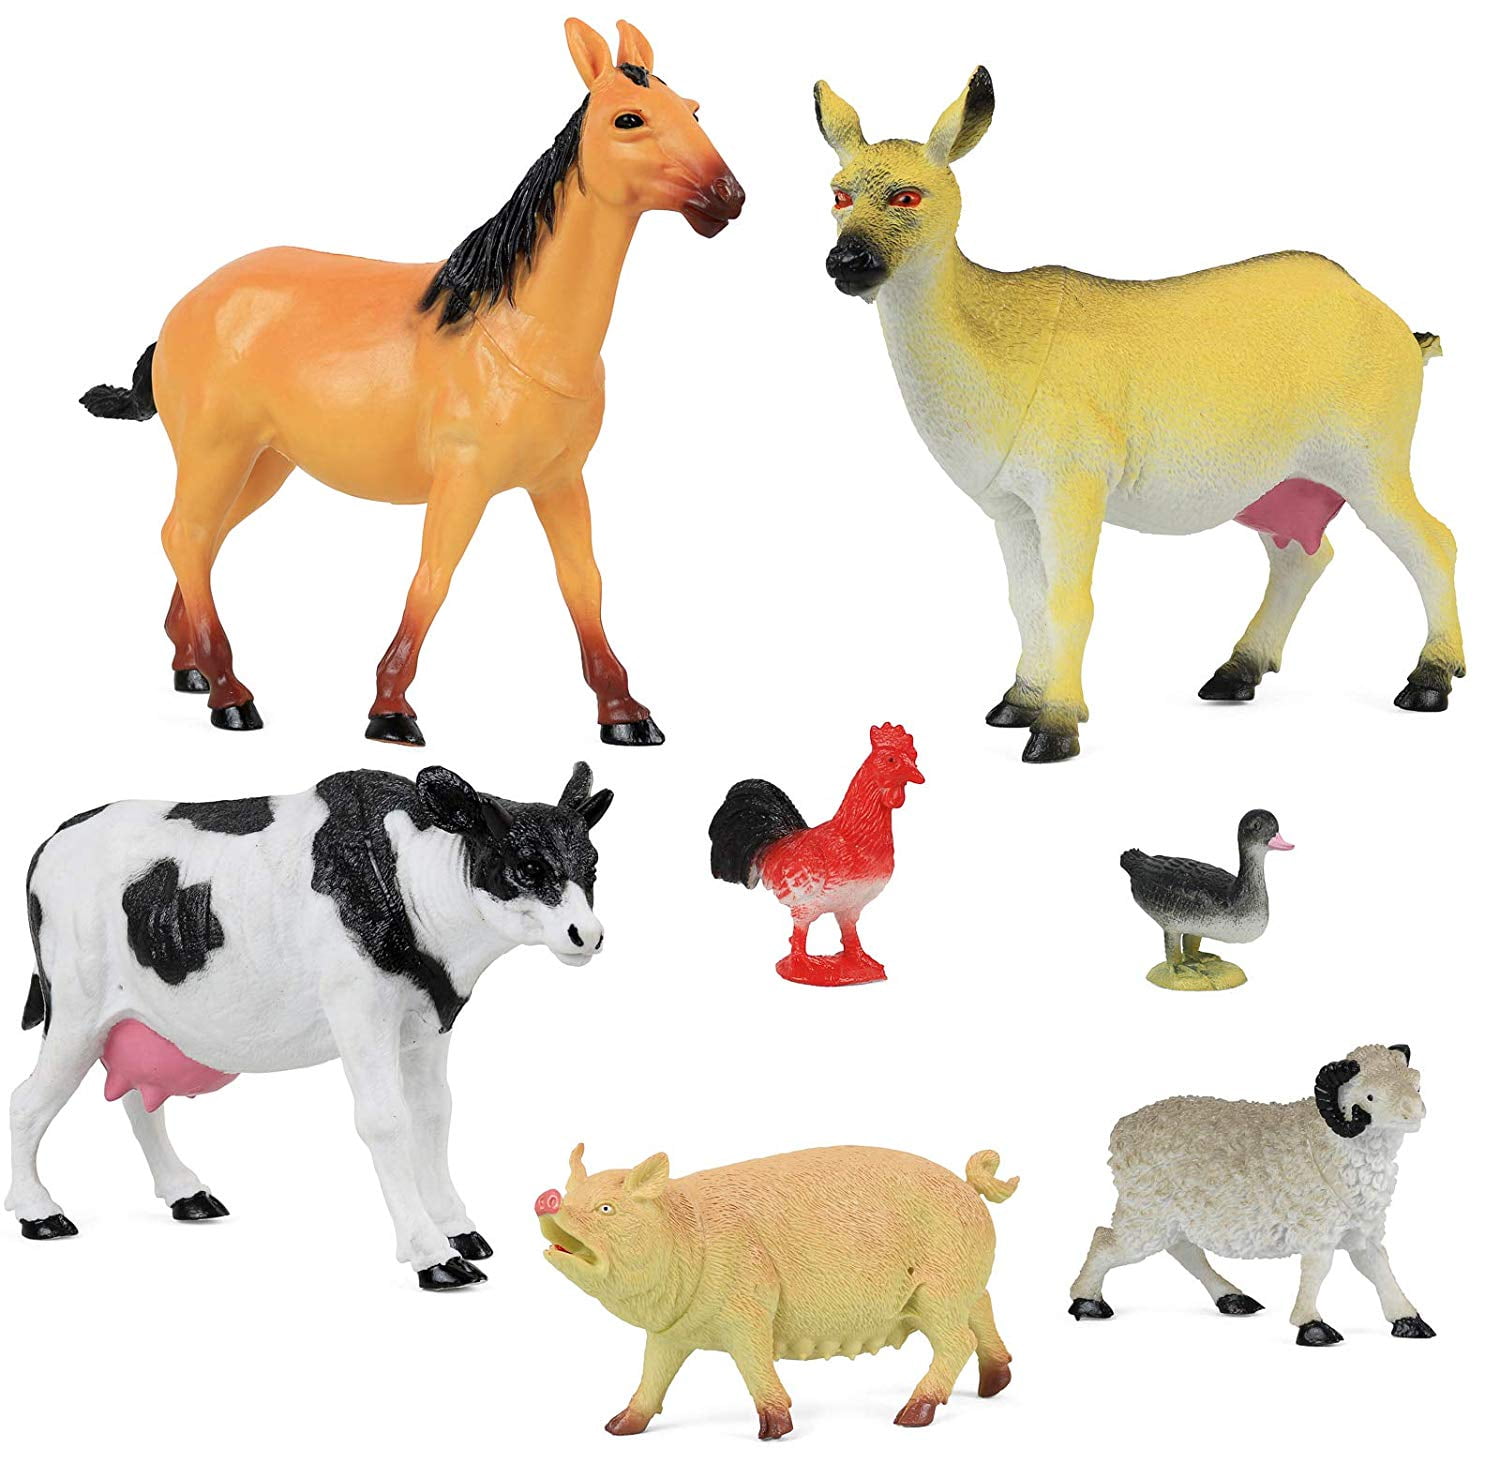 Toys Farm Animals Models Home Gift 6 pcs BIG Plastic Sheep Cow Horse Dog Pig 